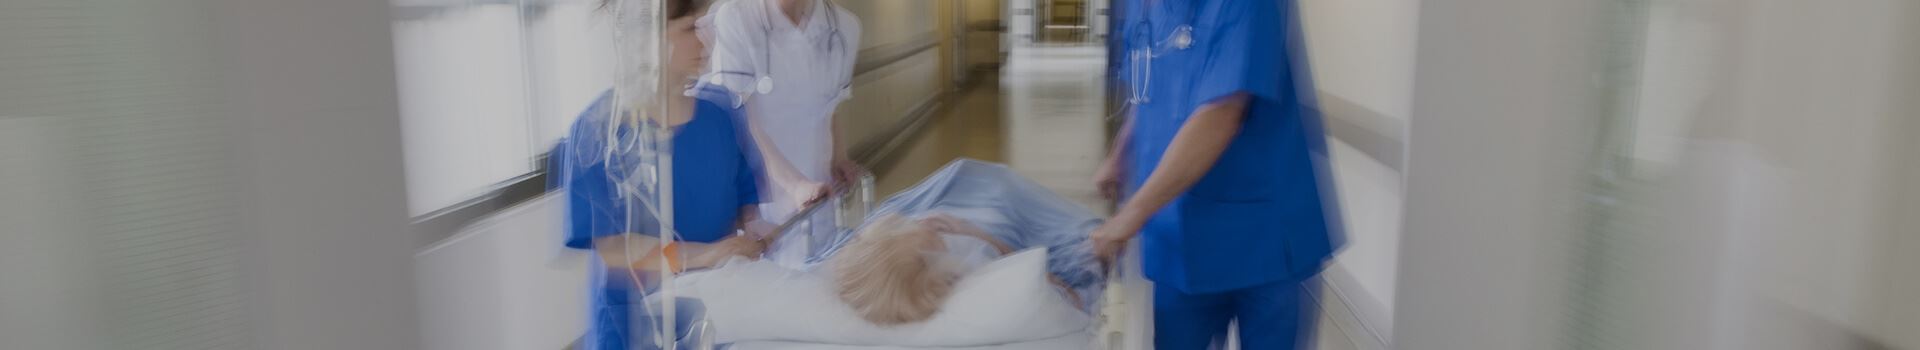 nurses pushing person on gurney